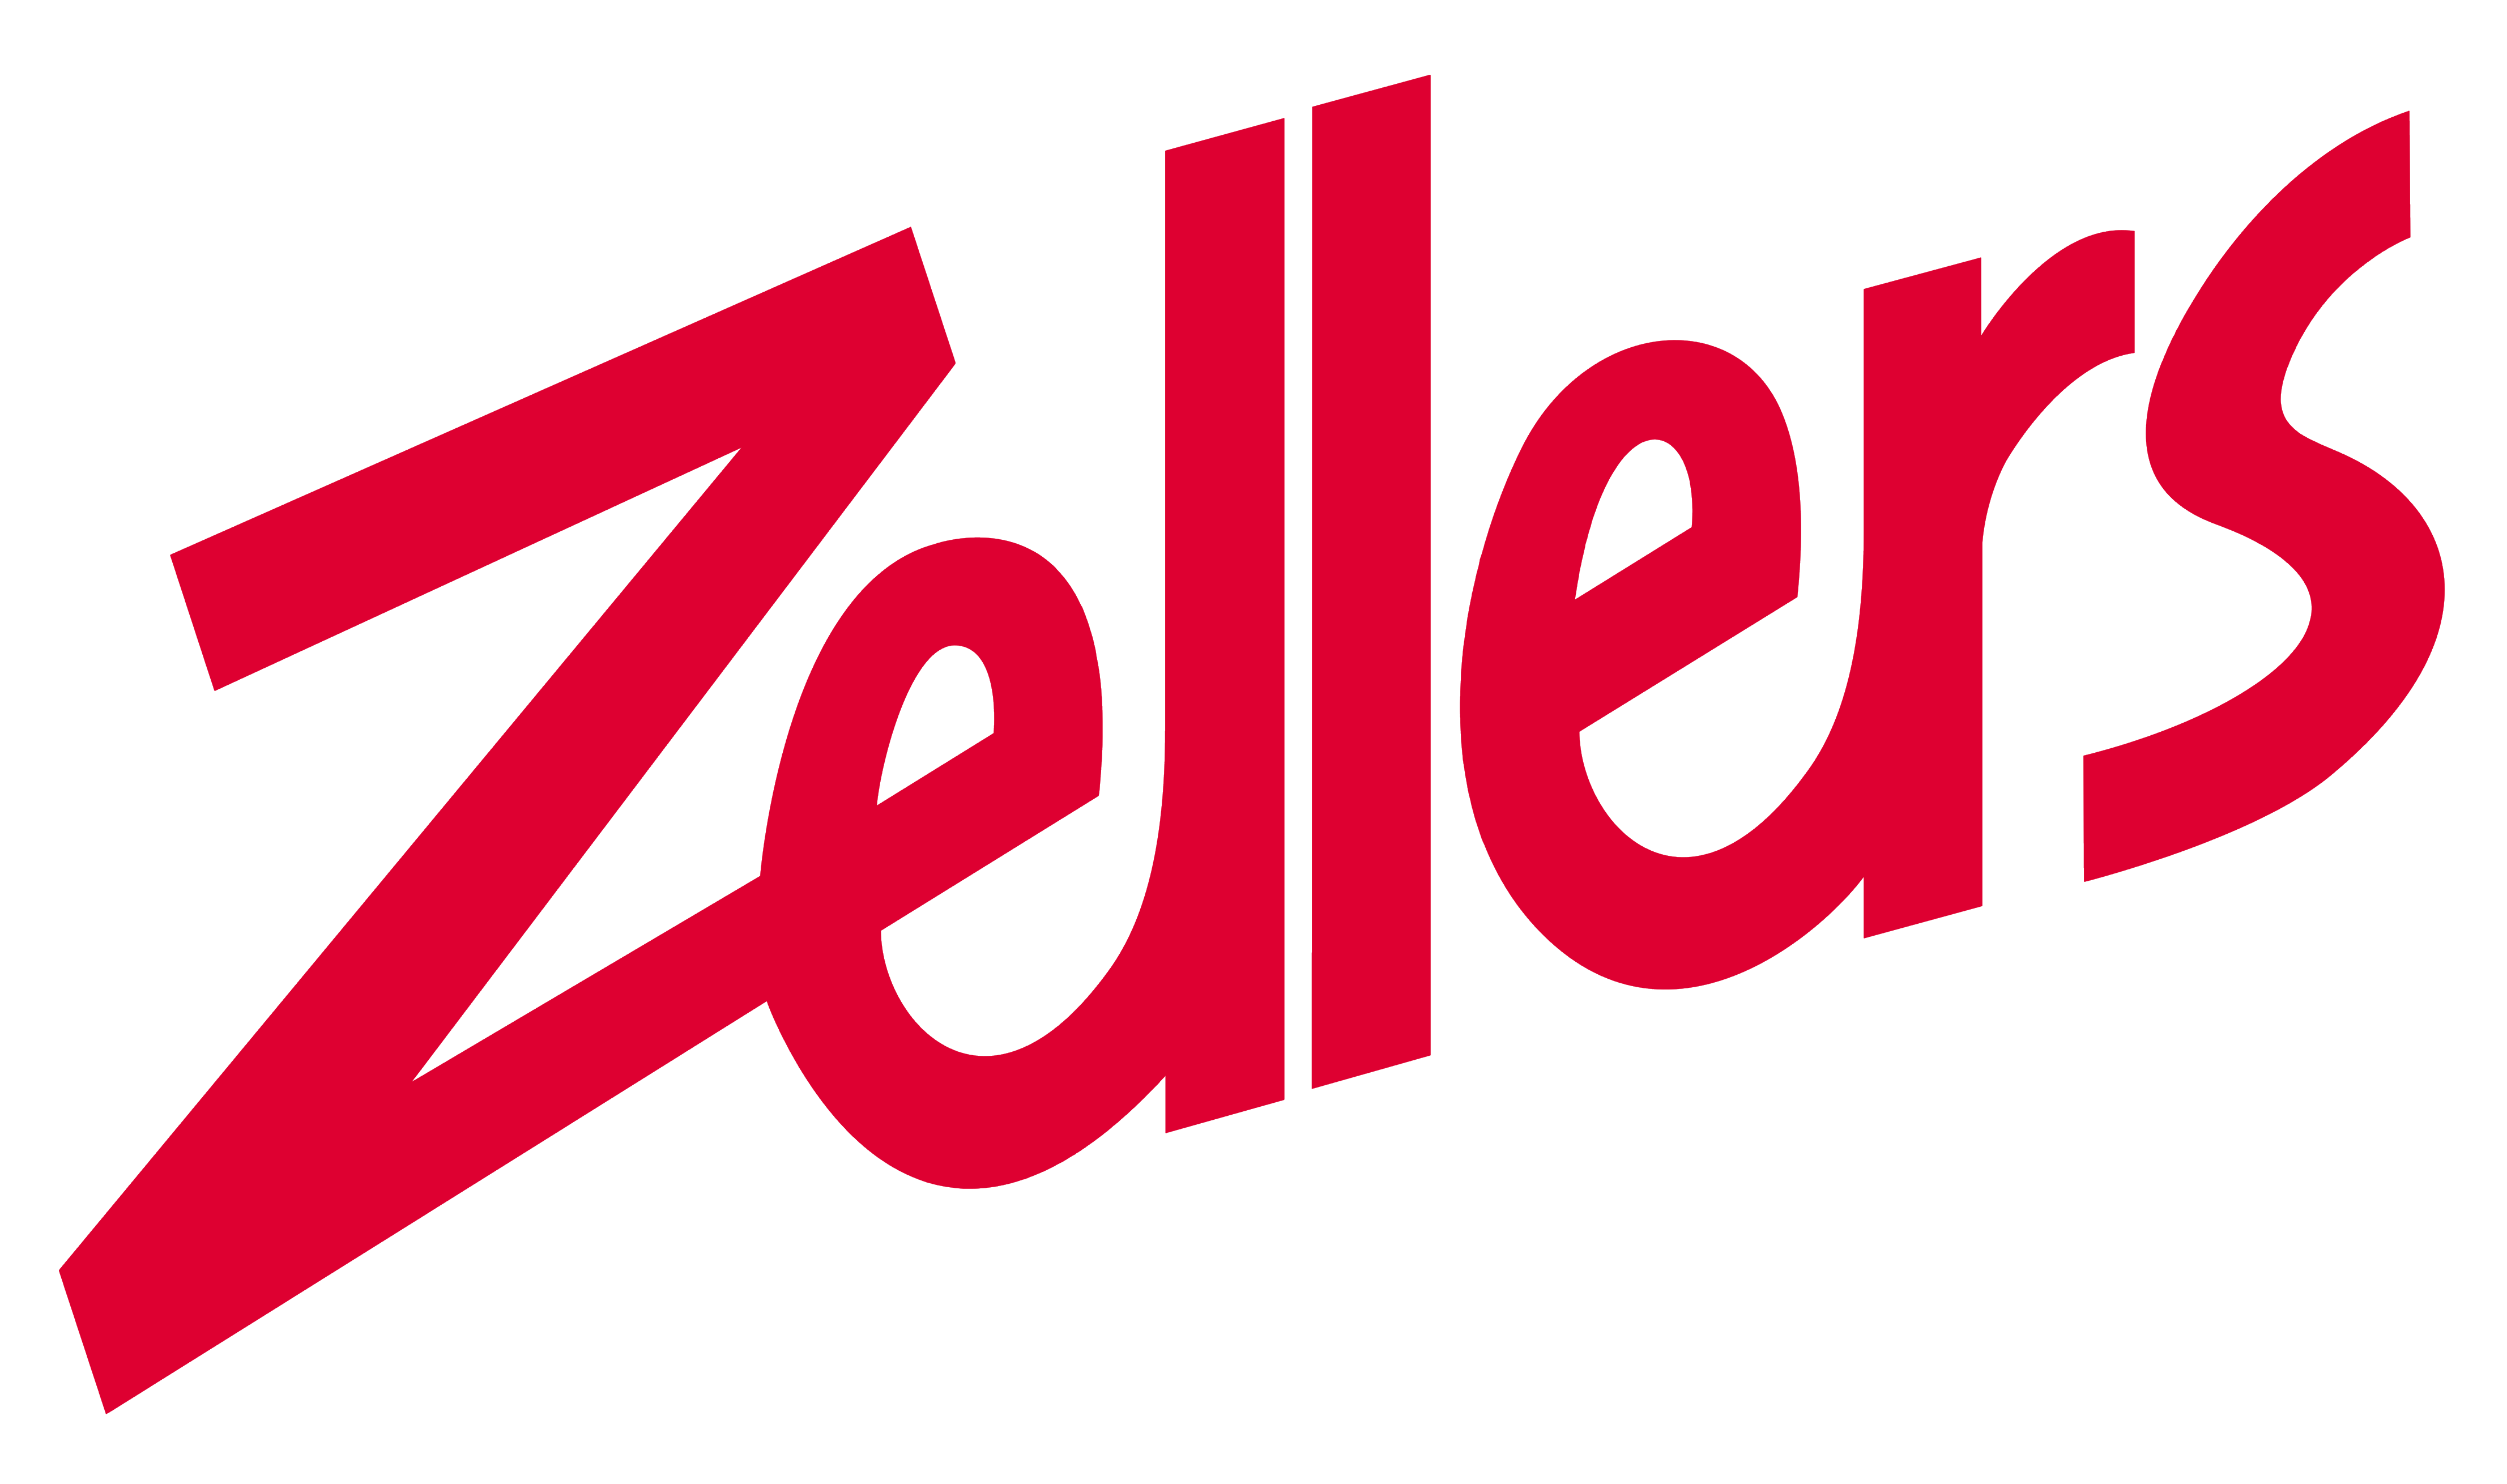 Zellers logo, logotype